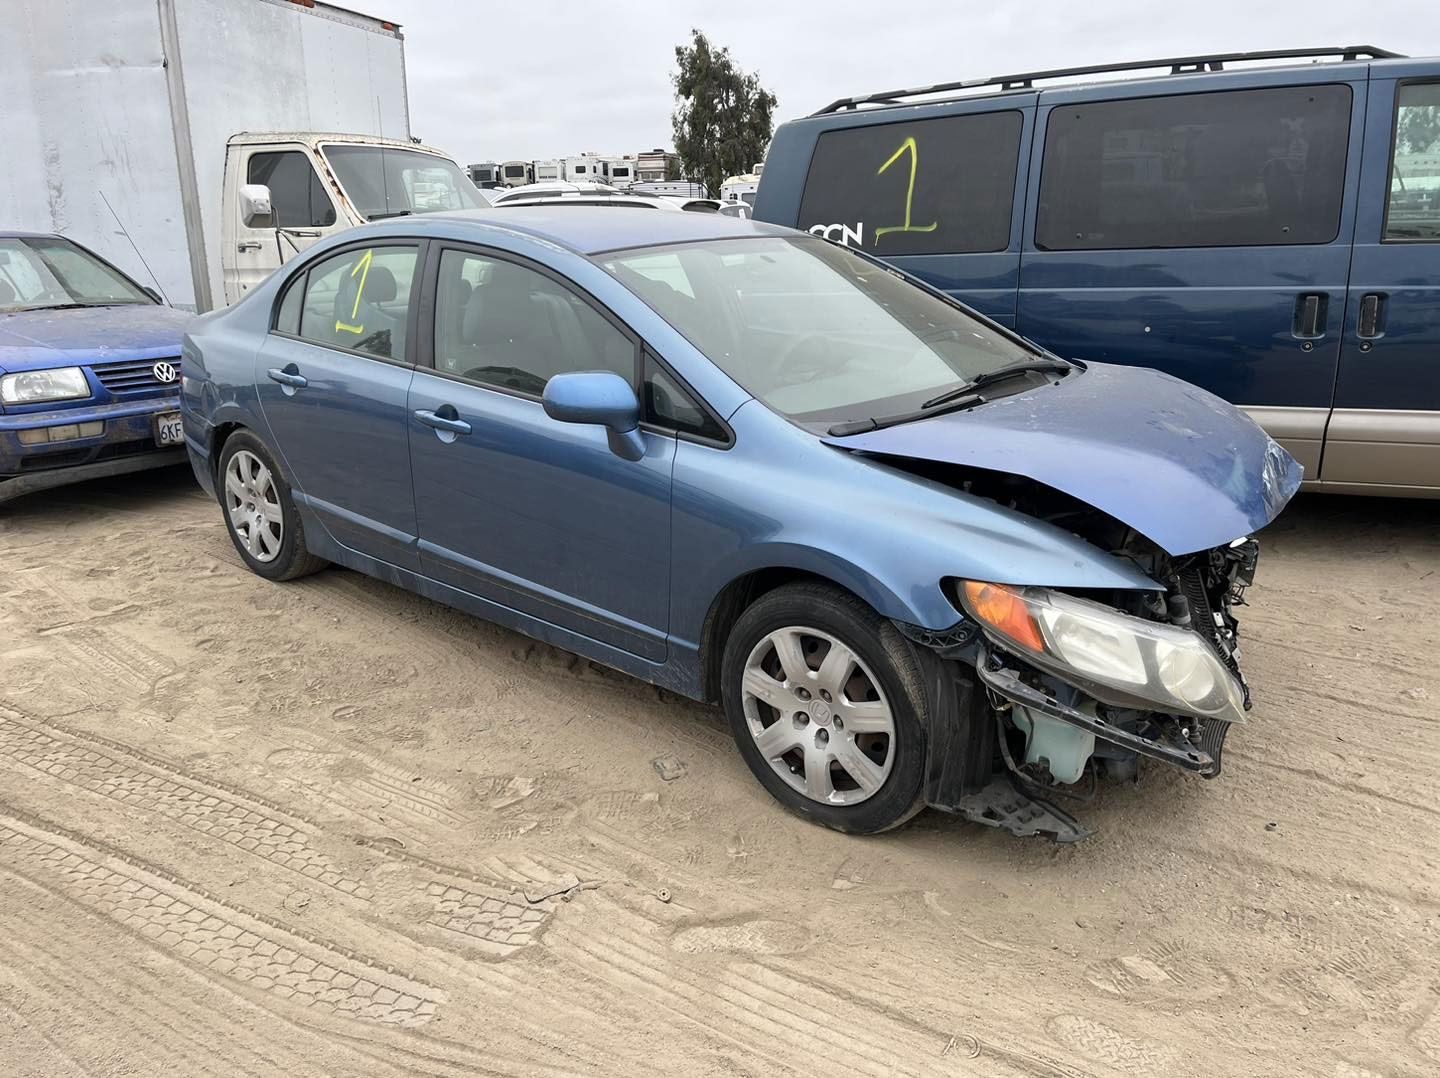 Salvage Yard | Timo's Auto Wrecking | Arroyo Grande, CA